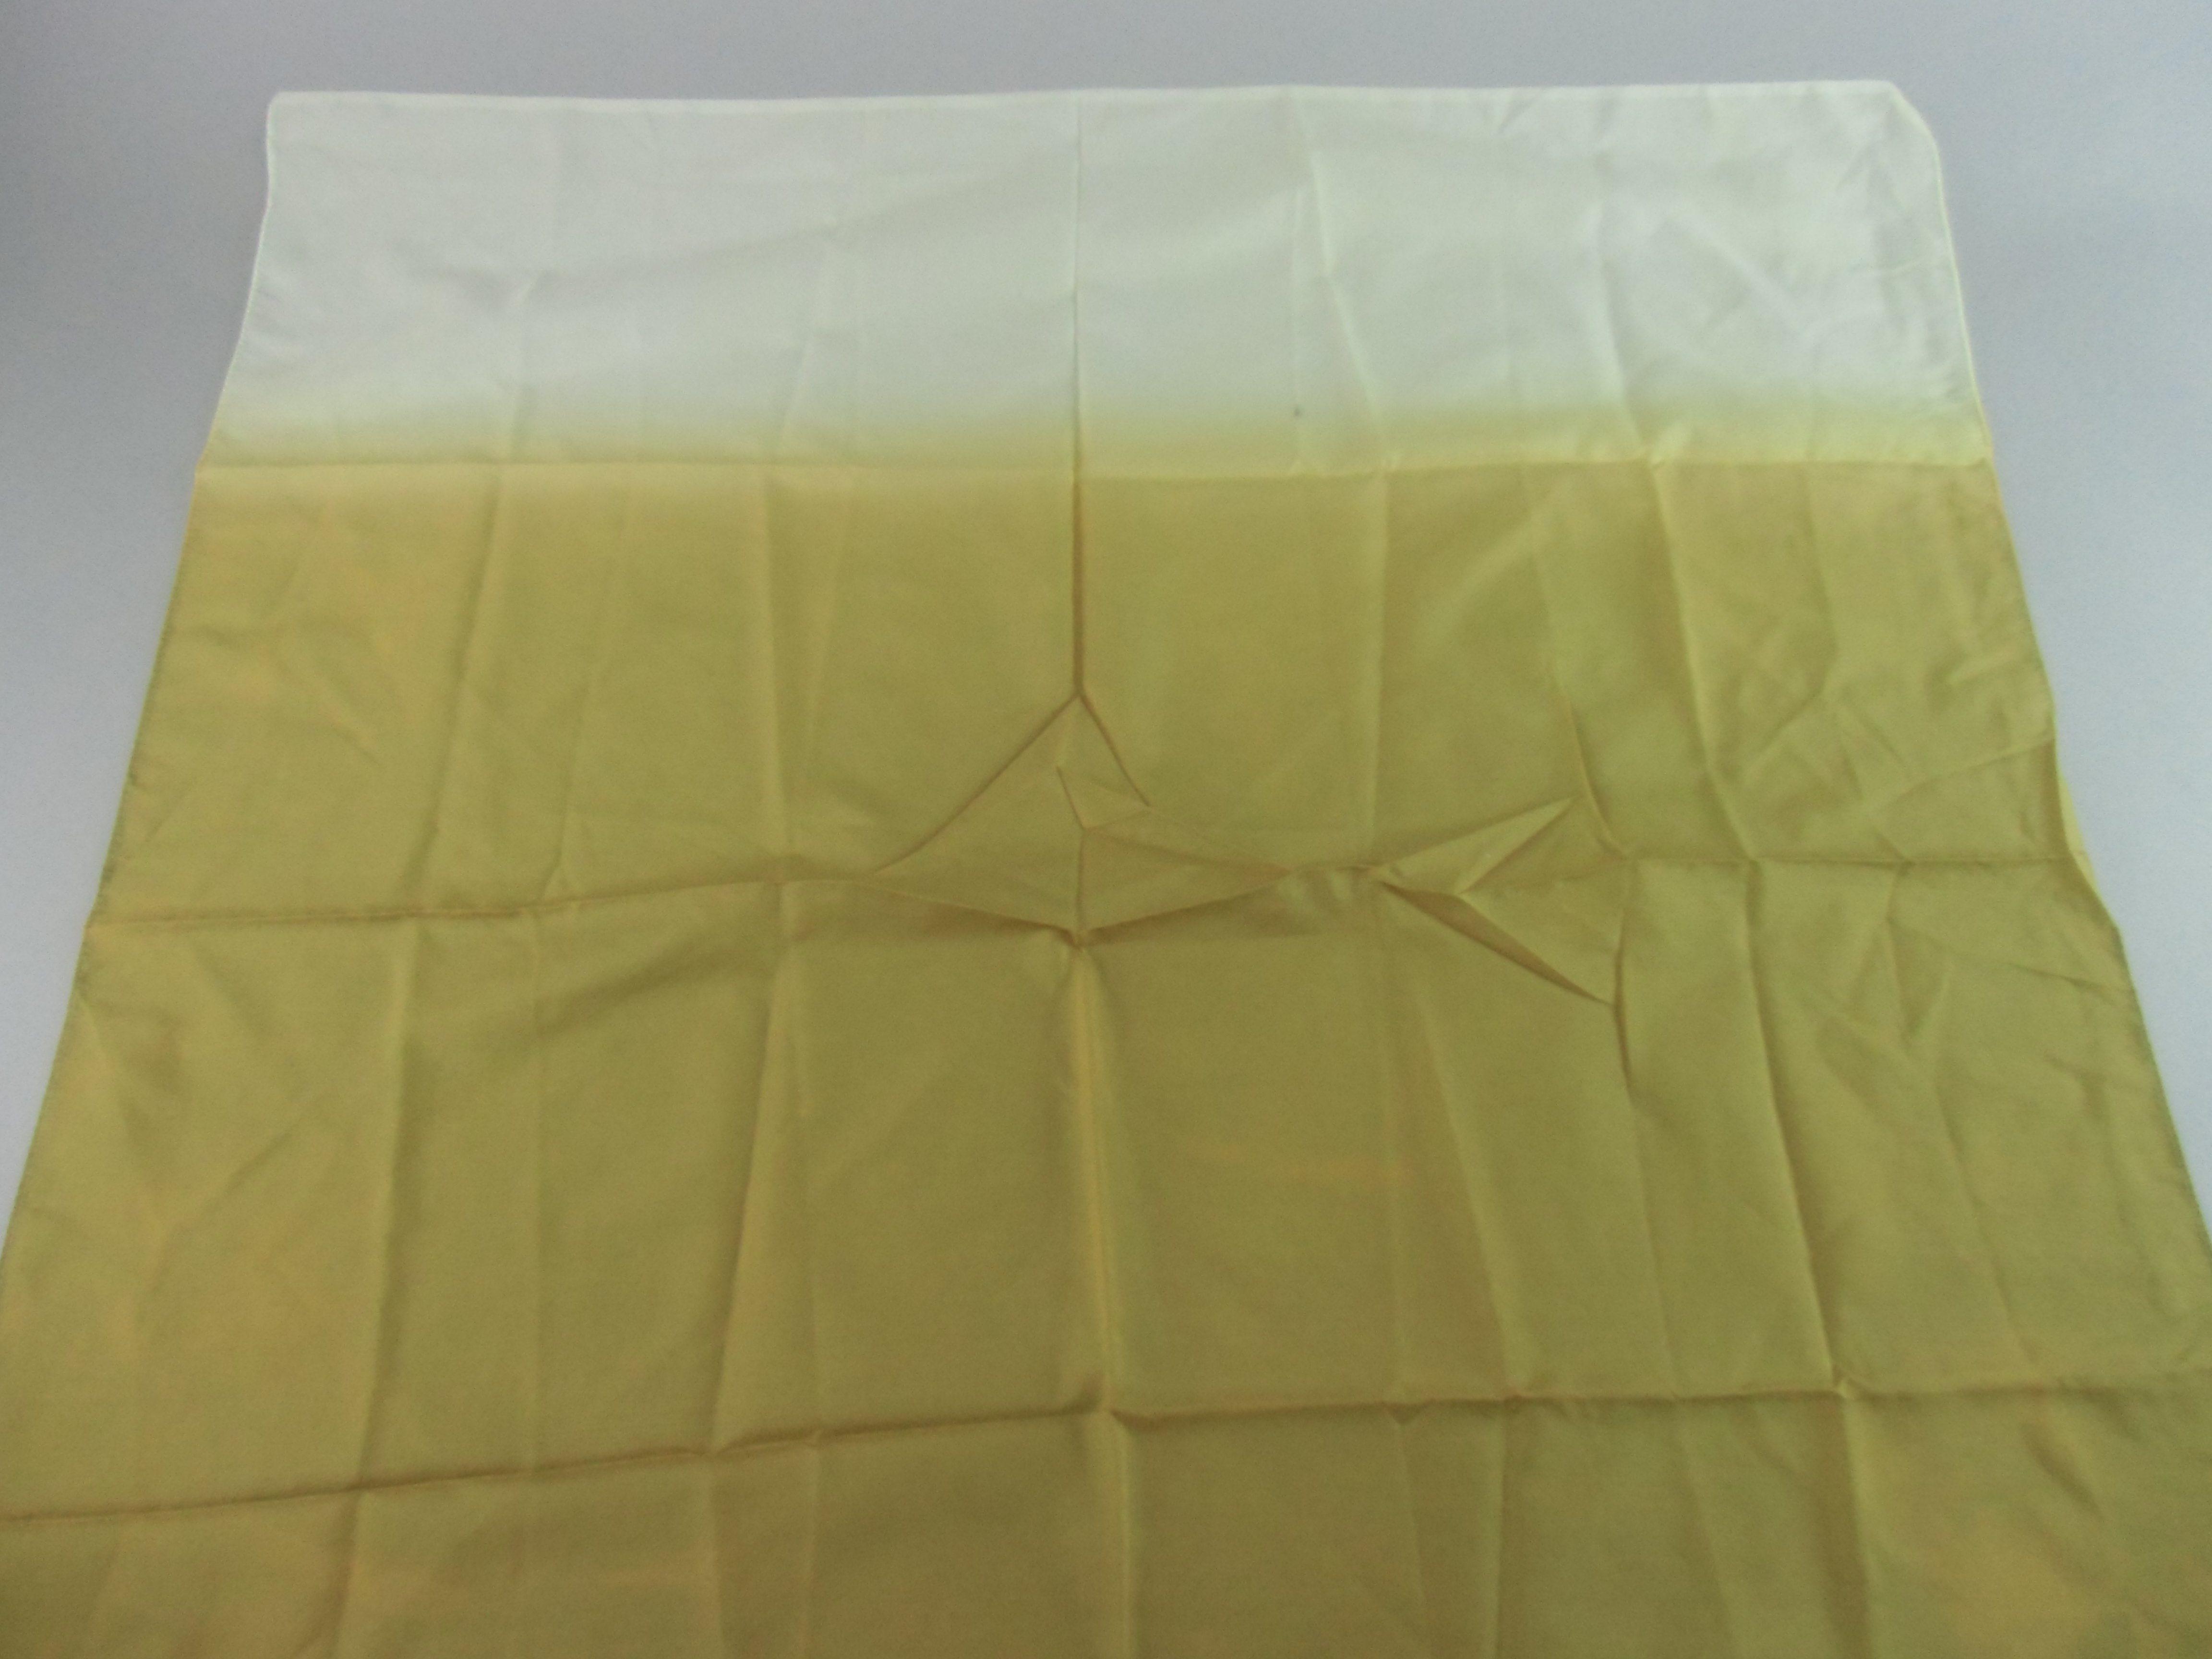 Japanese Wrap Cloth Furoshiki Vtg Fabric Nylon Yellow White Handkerchief FU99